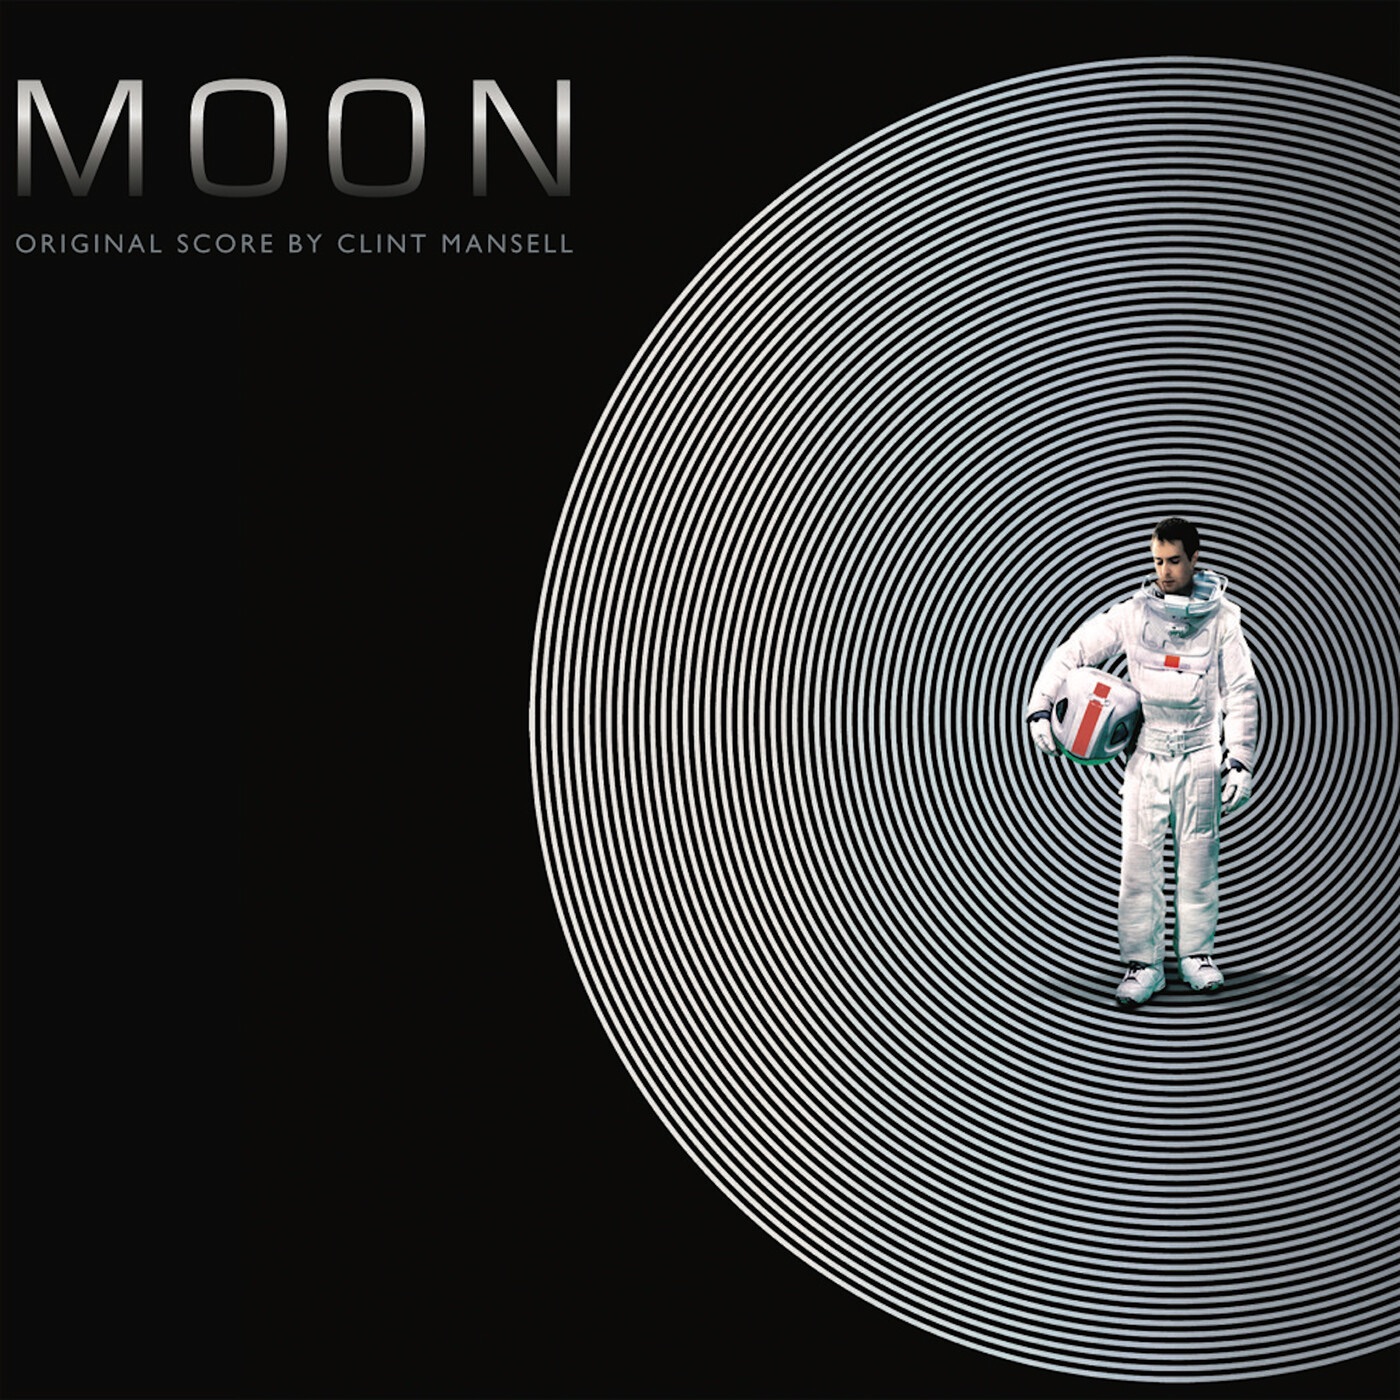 Moon (Original Score) by Clint Mansell